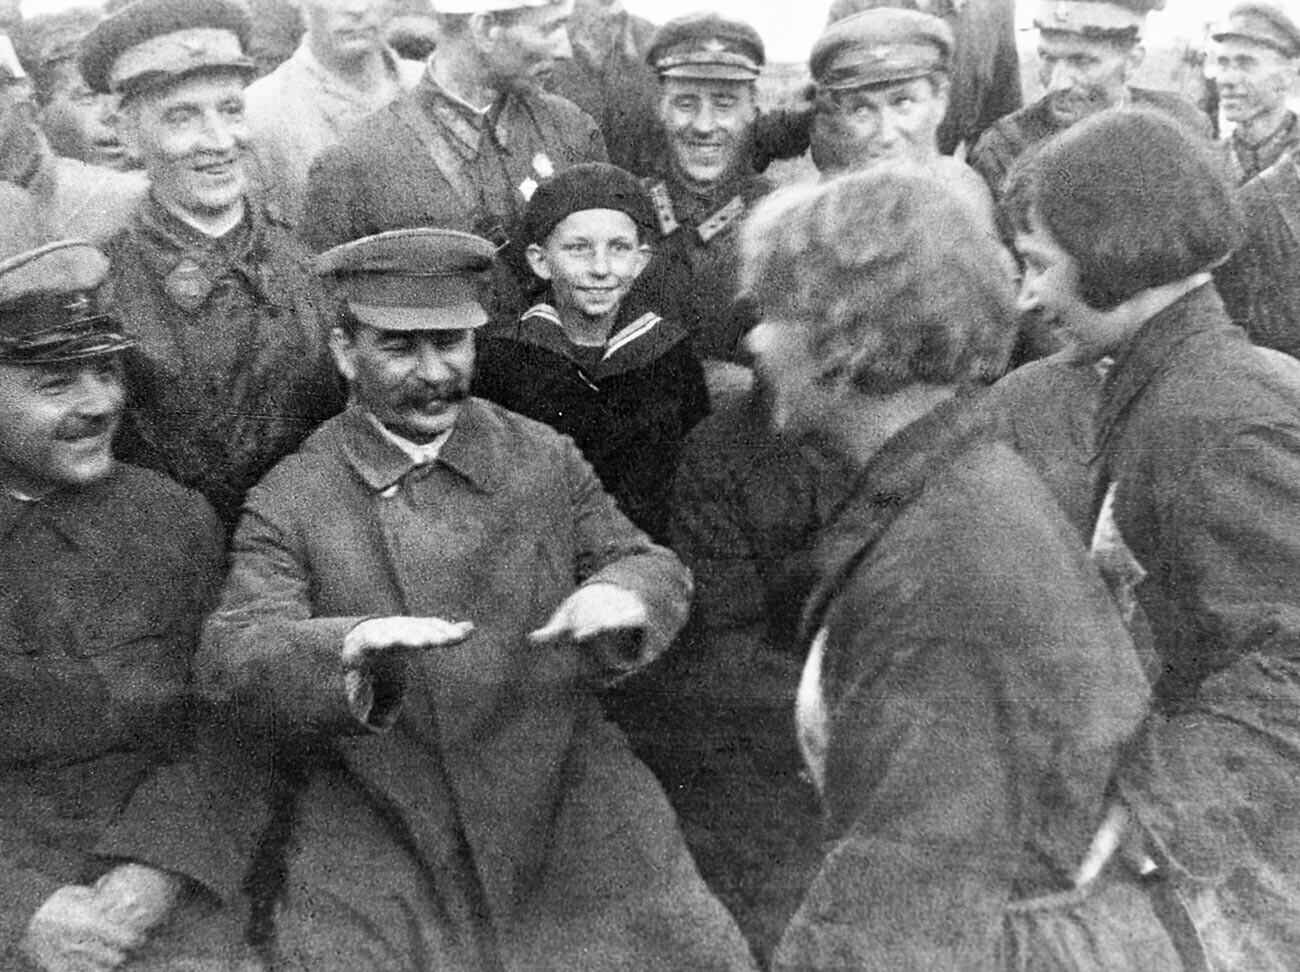 Јосиф Стаљин и Климент Ворошилов разговараат со пилоти и падобранци. Аеродром Тушино.
